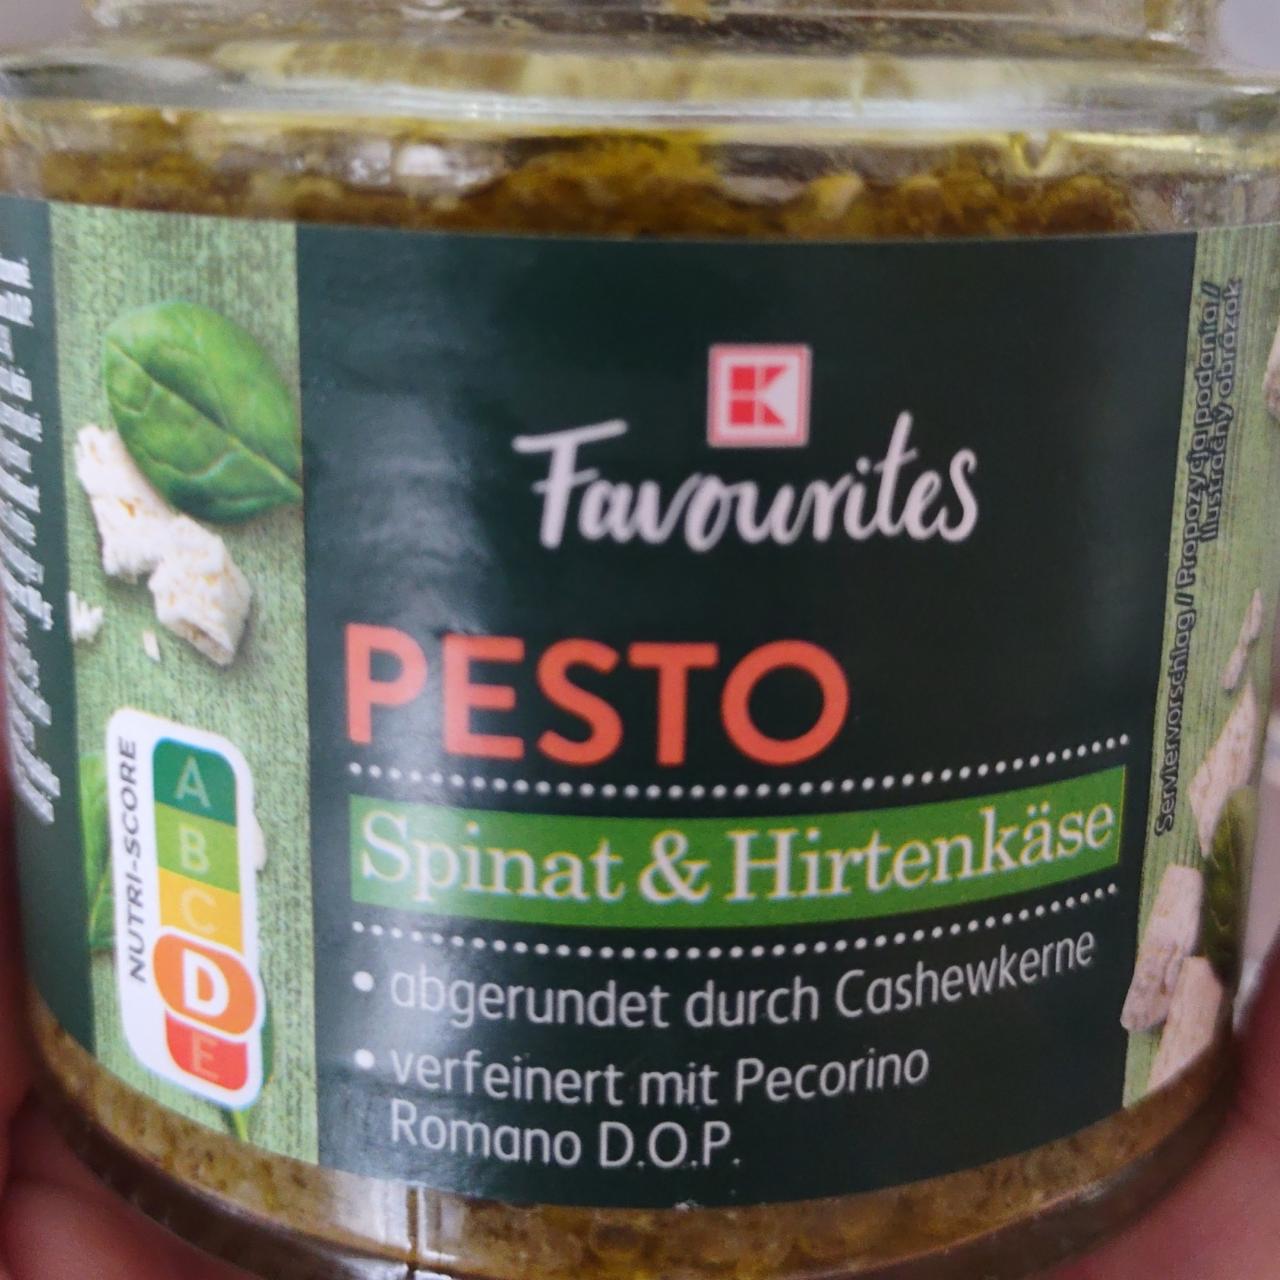 Fotografie - Pesto Spinat & Hirtenkäse K-Favourites